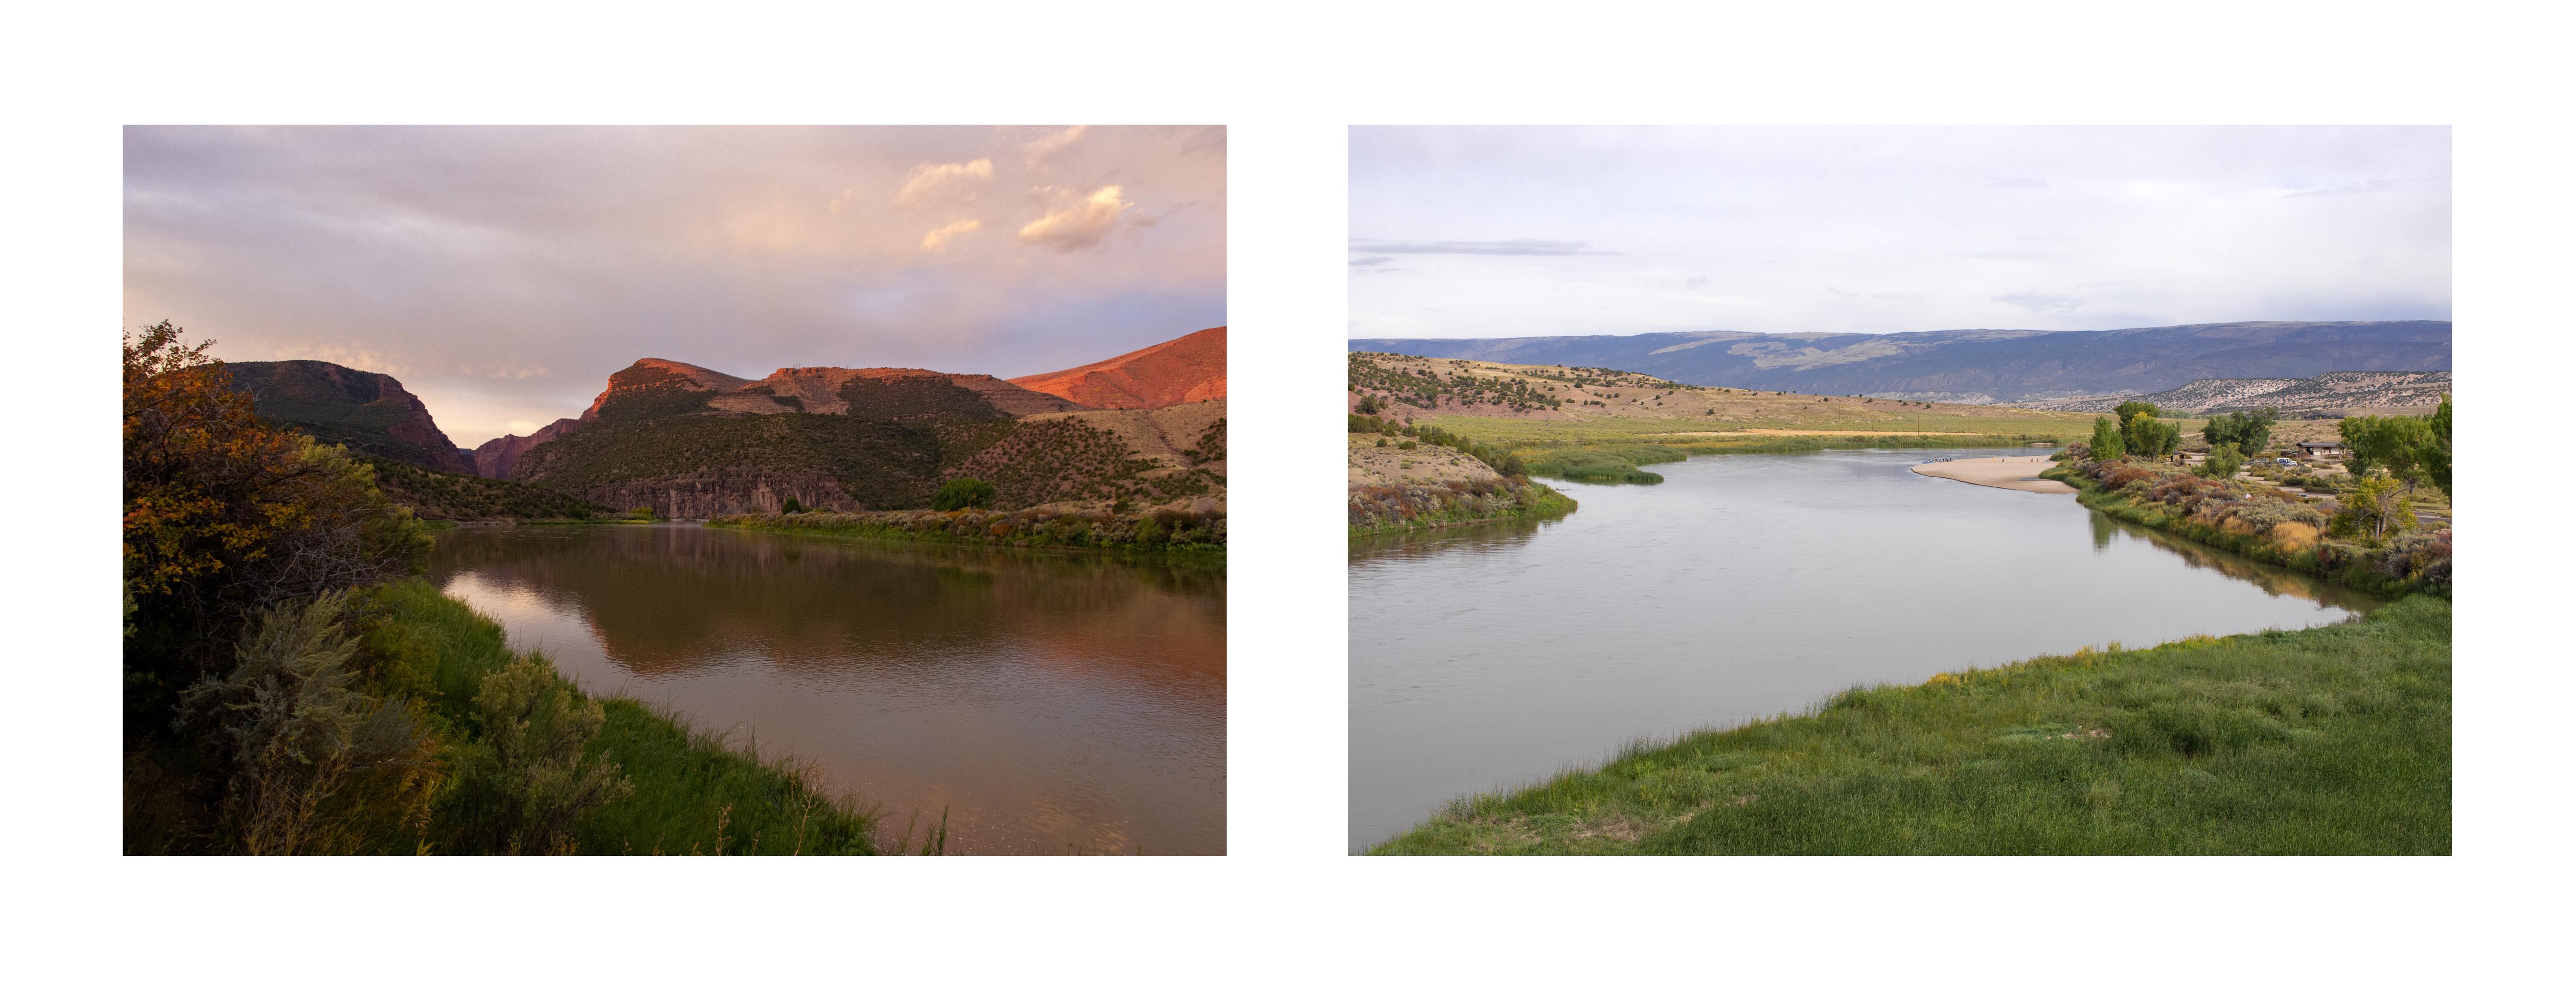 Color Photograph Edie Winograde - diptyque "Gates of Lodore, dawn" et ""Green River, raft" Photographie de paysage